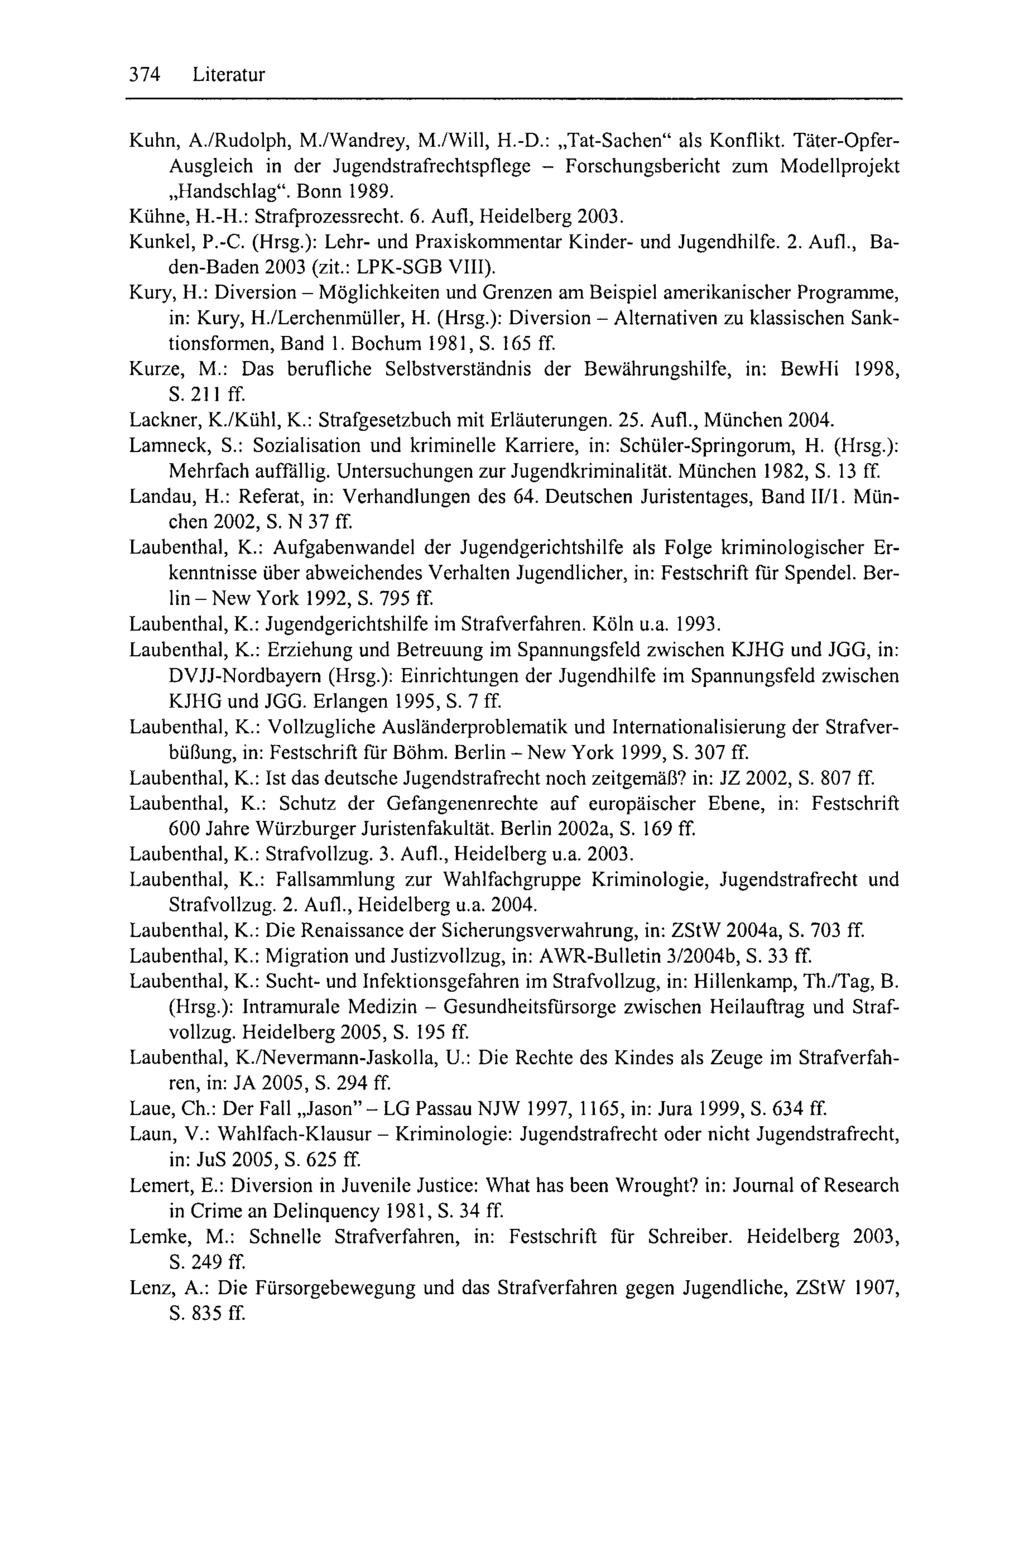 374 Literatur Kuhn, A./Rudolph, M./Wandrey, M./Will, H.-D.: Tat-Sachen" als Konflikt. Täter-Opfer- Ausgleich in der Jugendstrafrechtspflege - Forschungsbericht zum Modellprojekt Handschlag".